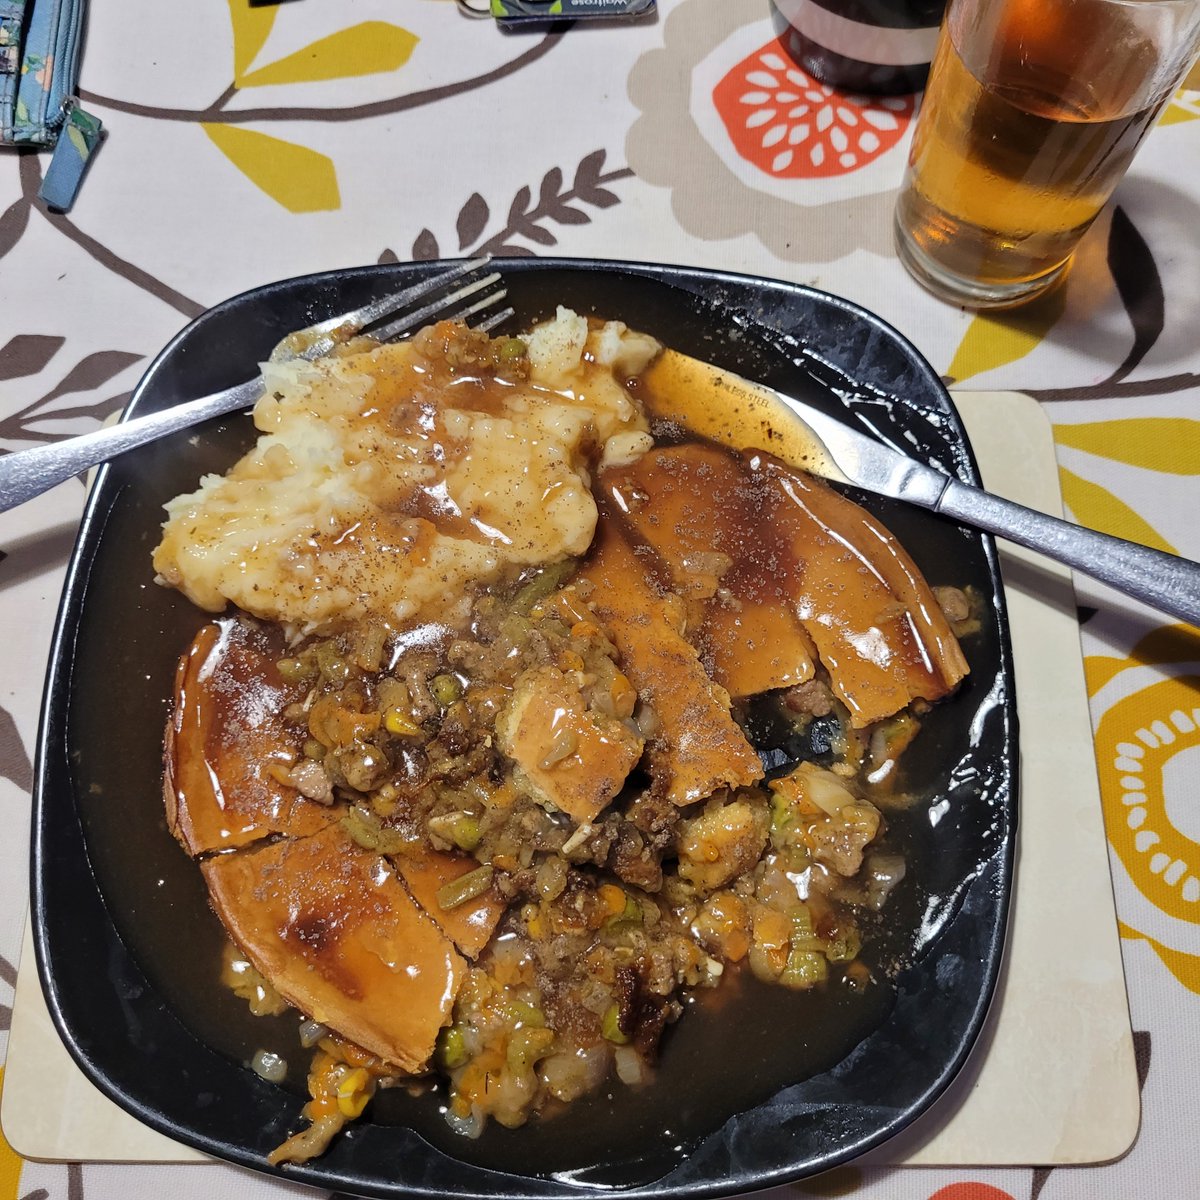 Lamb and veg pie with mashed potato & gravy.

#GreatBritishFood